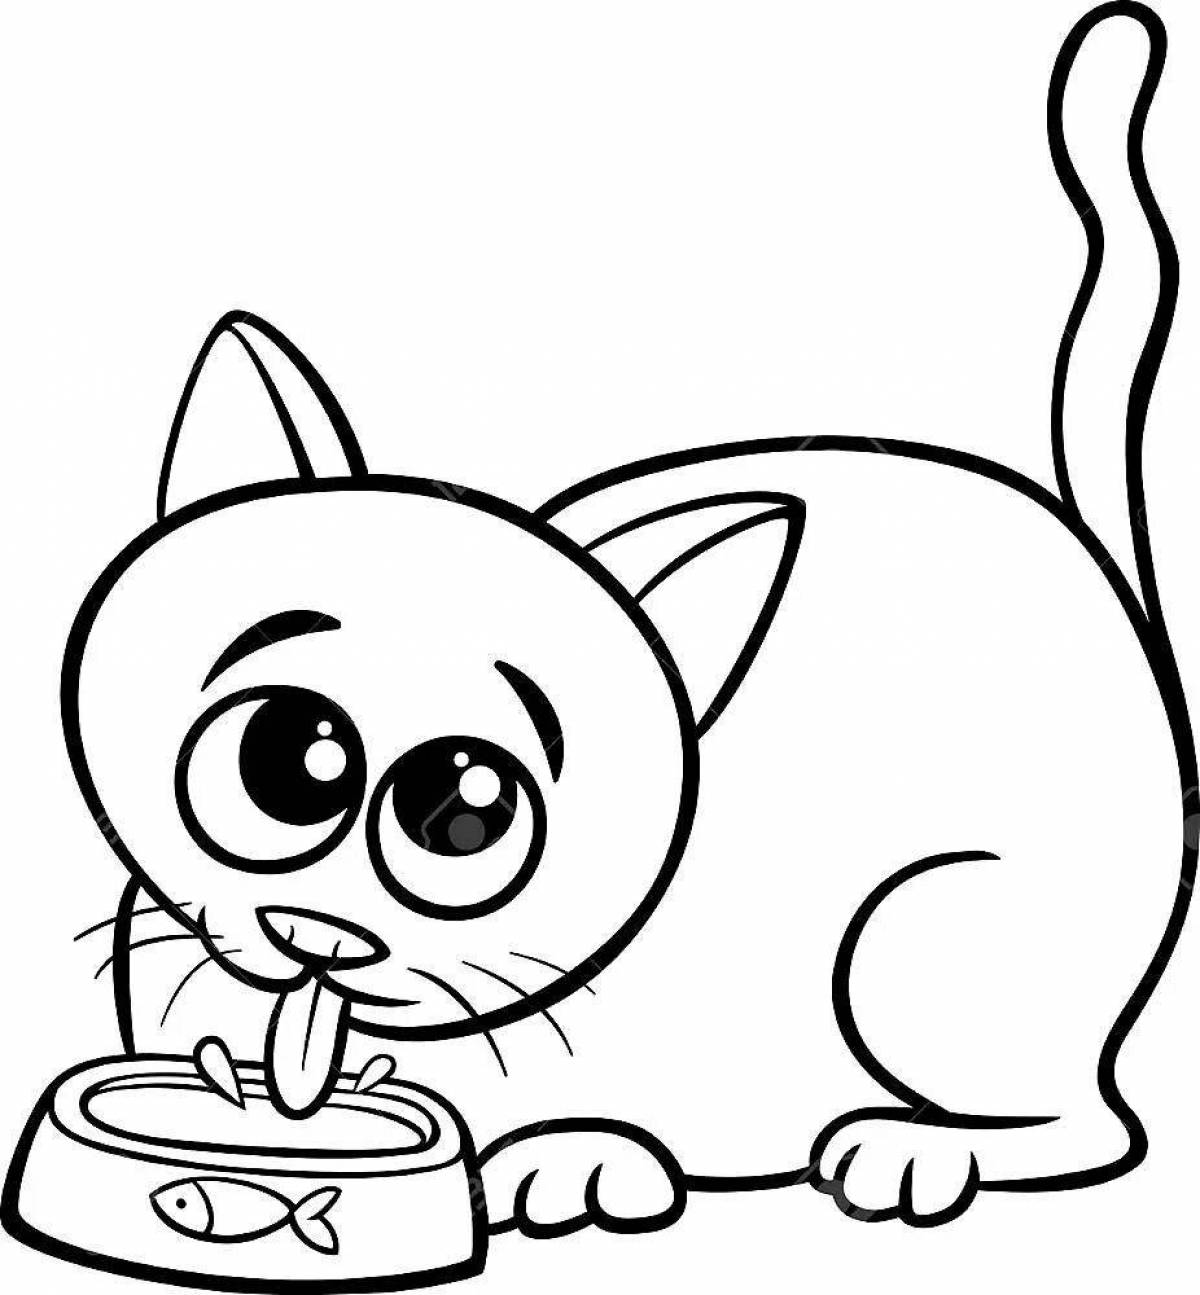 Coloring book happy cat drinking milk